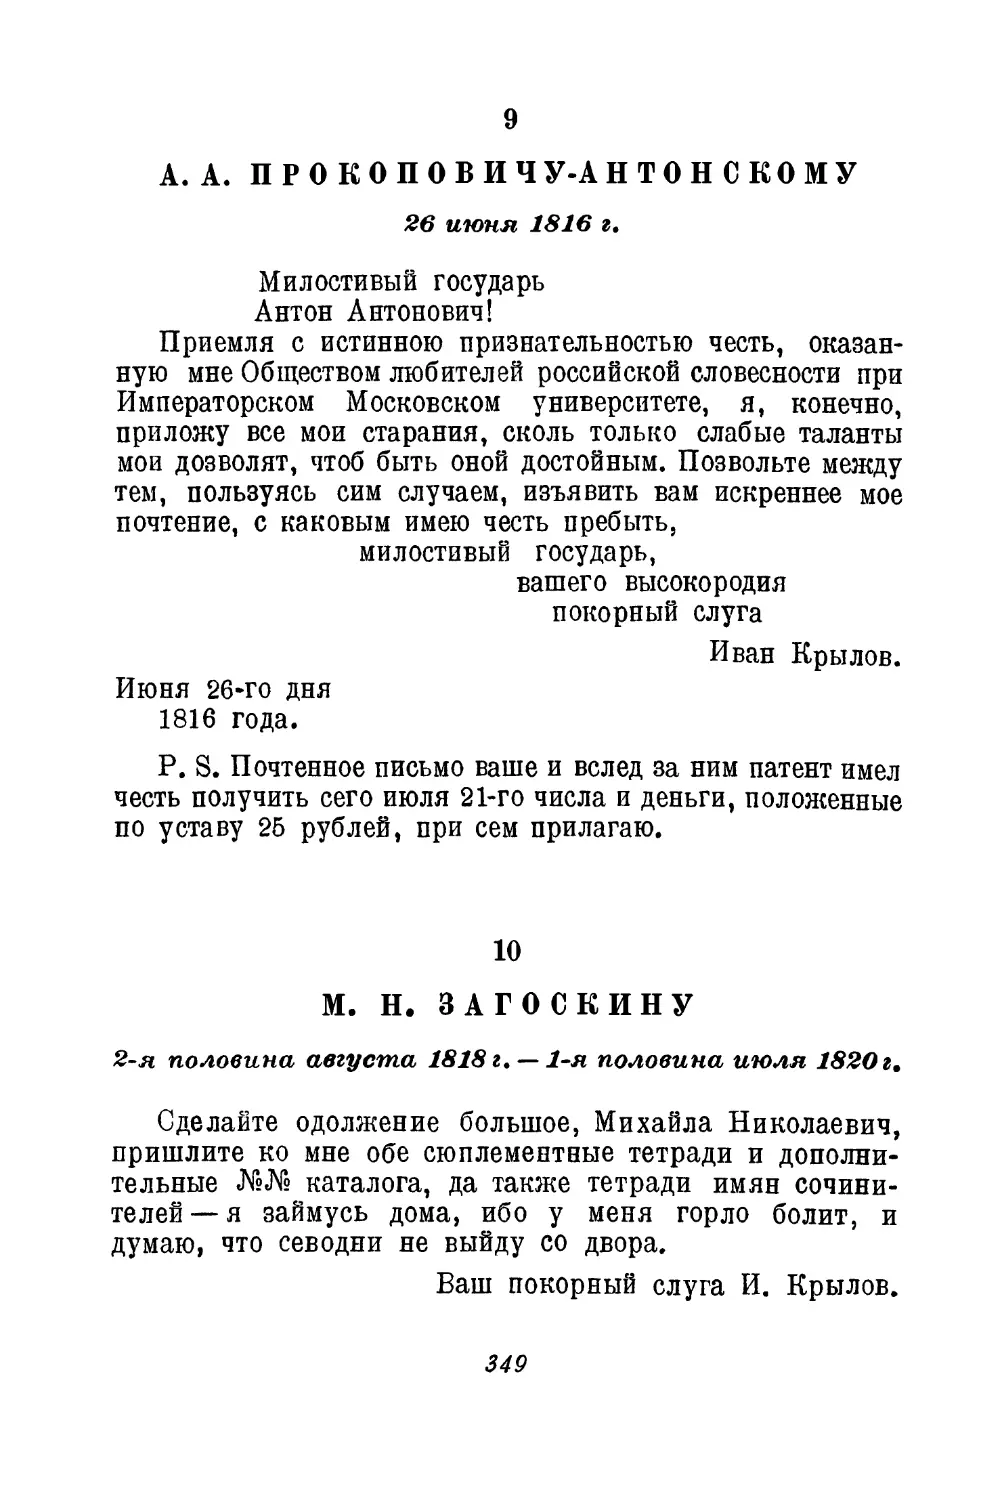 9. А. А. Прокоповичу-Антонскому. 26 июня 1816 г.
10. М. Н. Загоскину. 2-я половина августа 1818 г. — первая половина июля 1820 г.